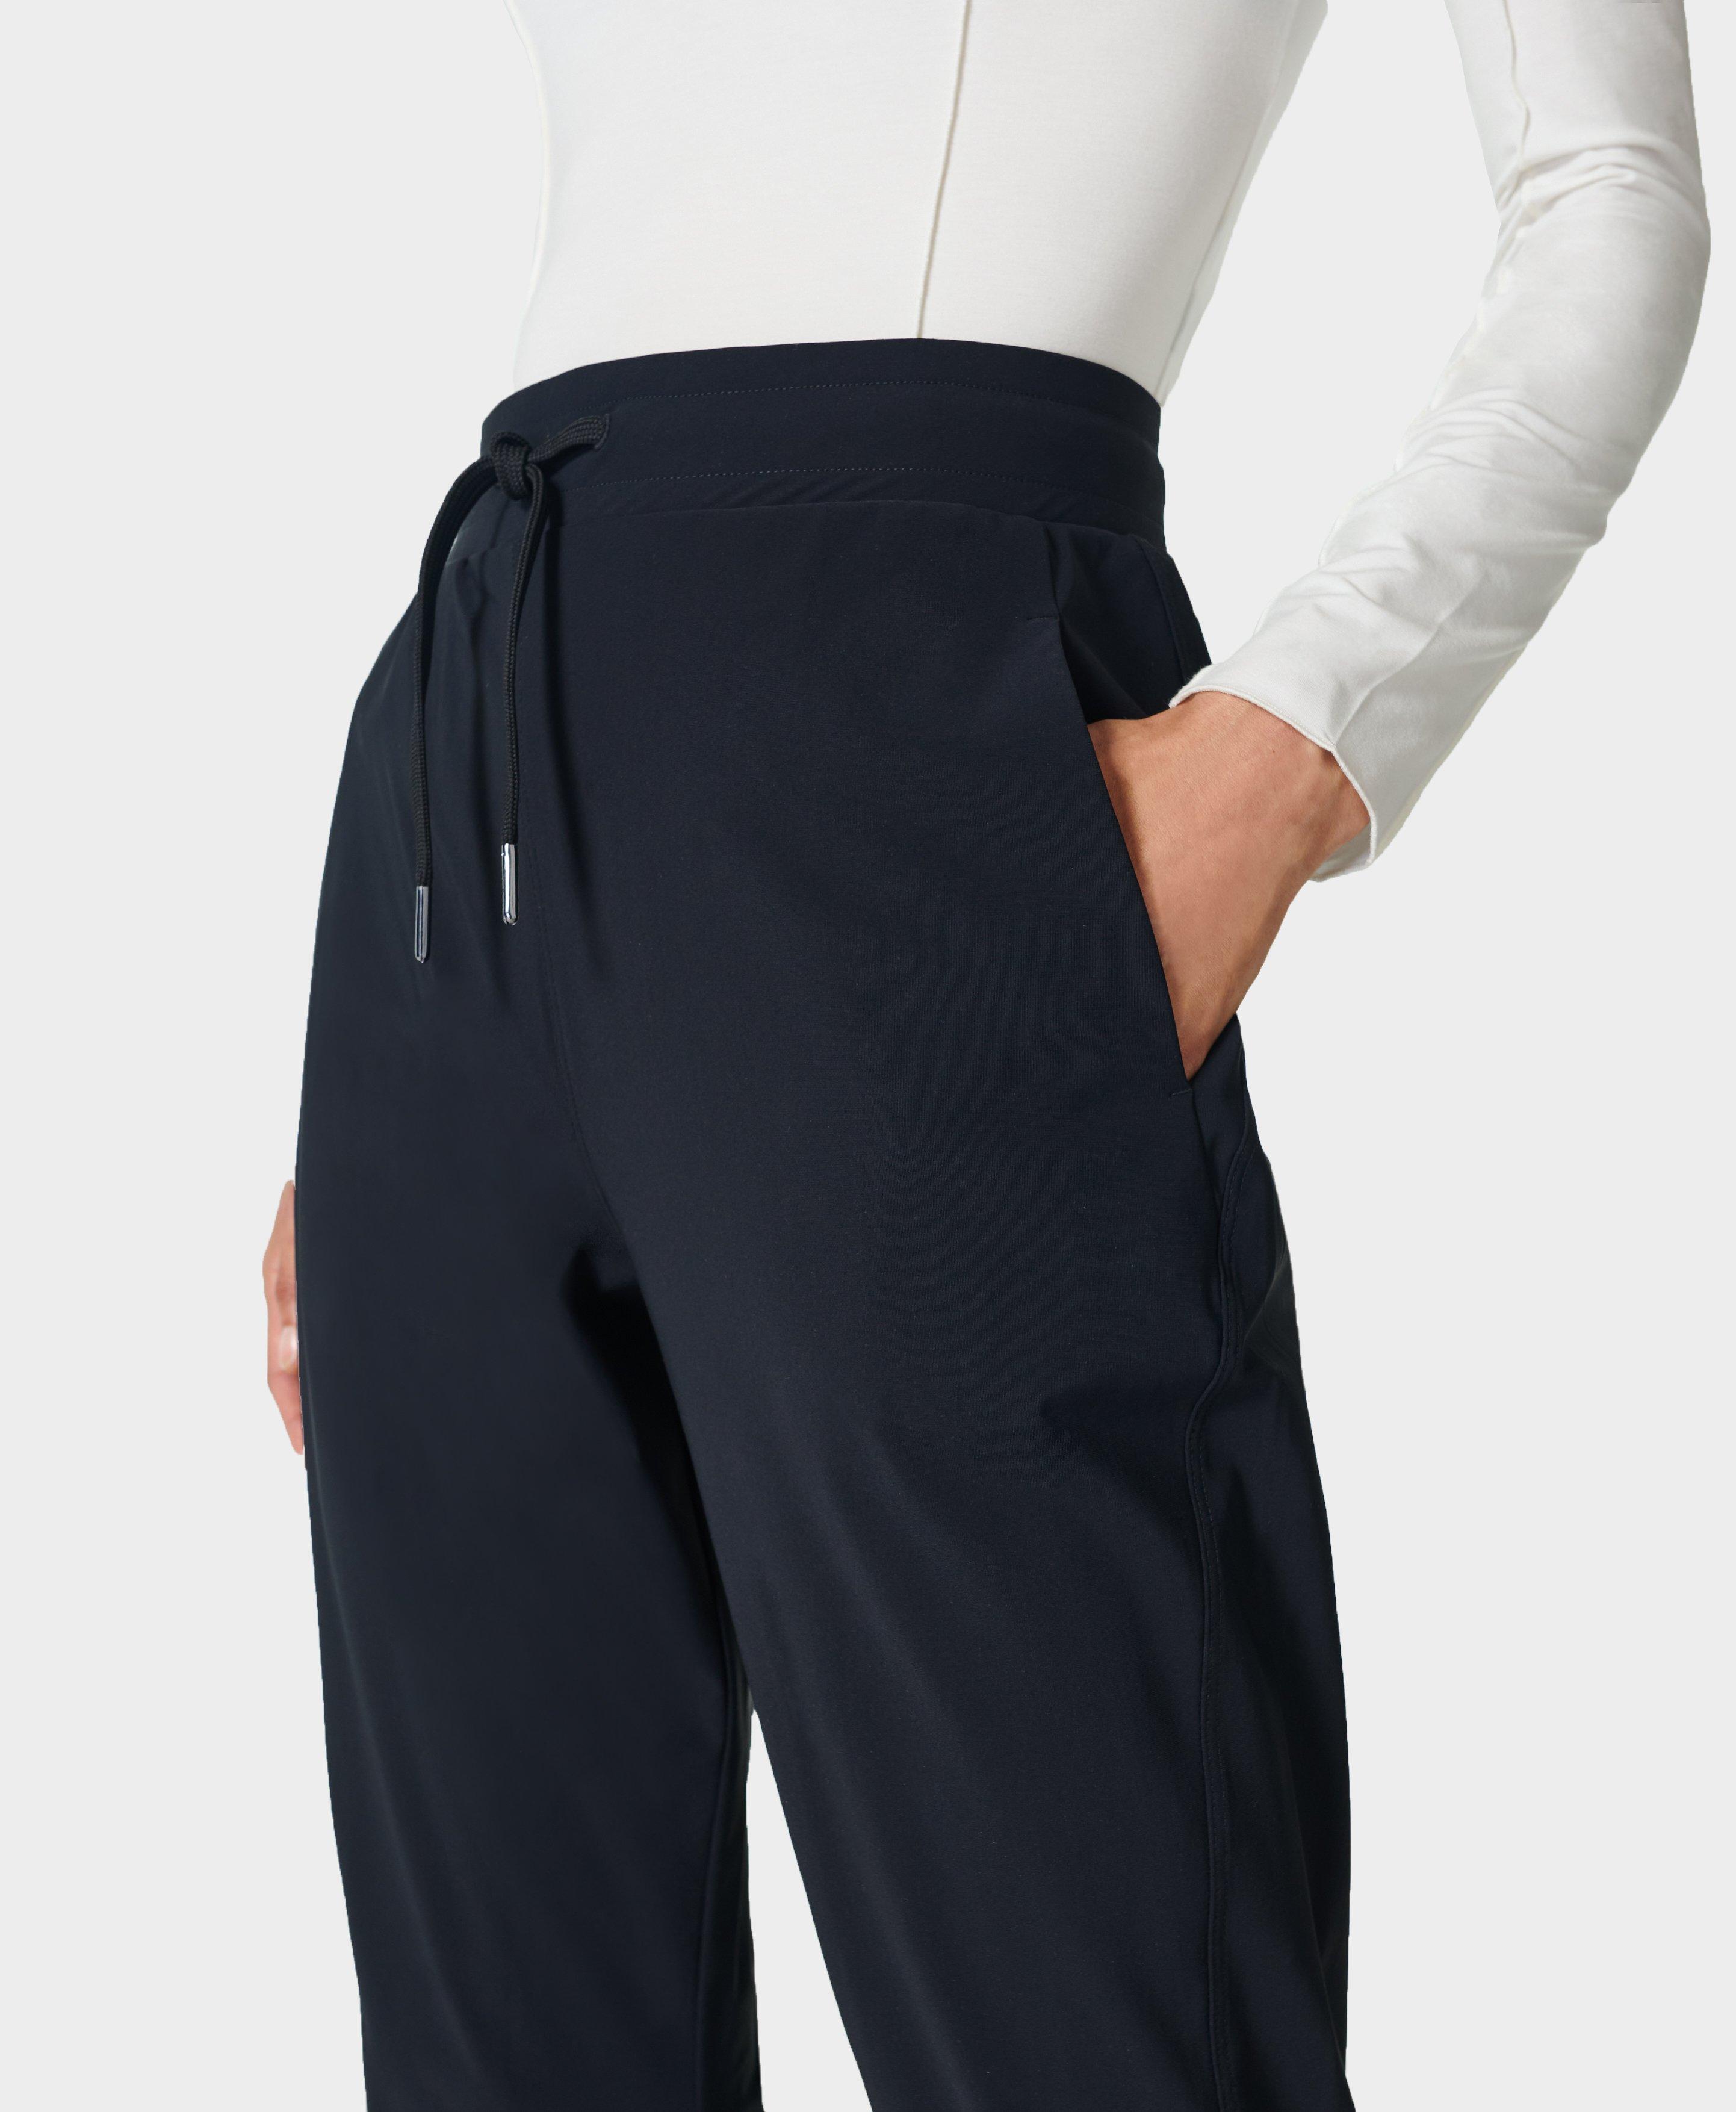 Winter Explorer Crop Flare Pants - Black, Women's Trousers & Yoga Pants